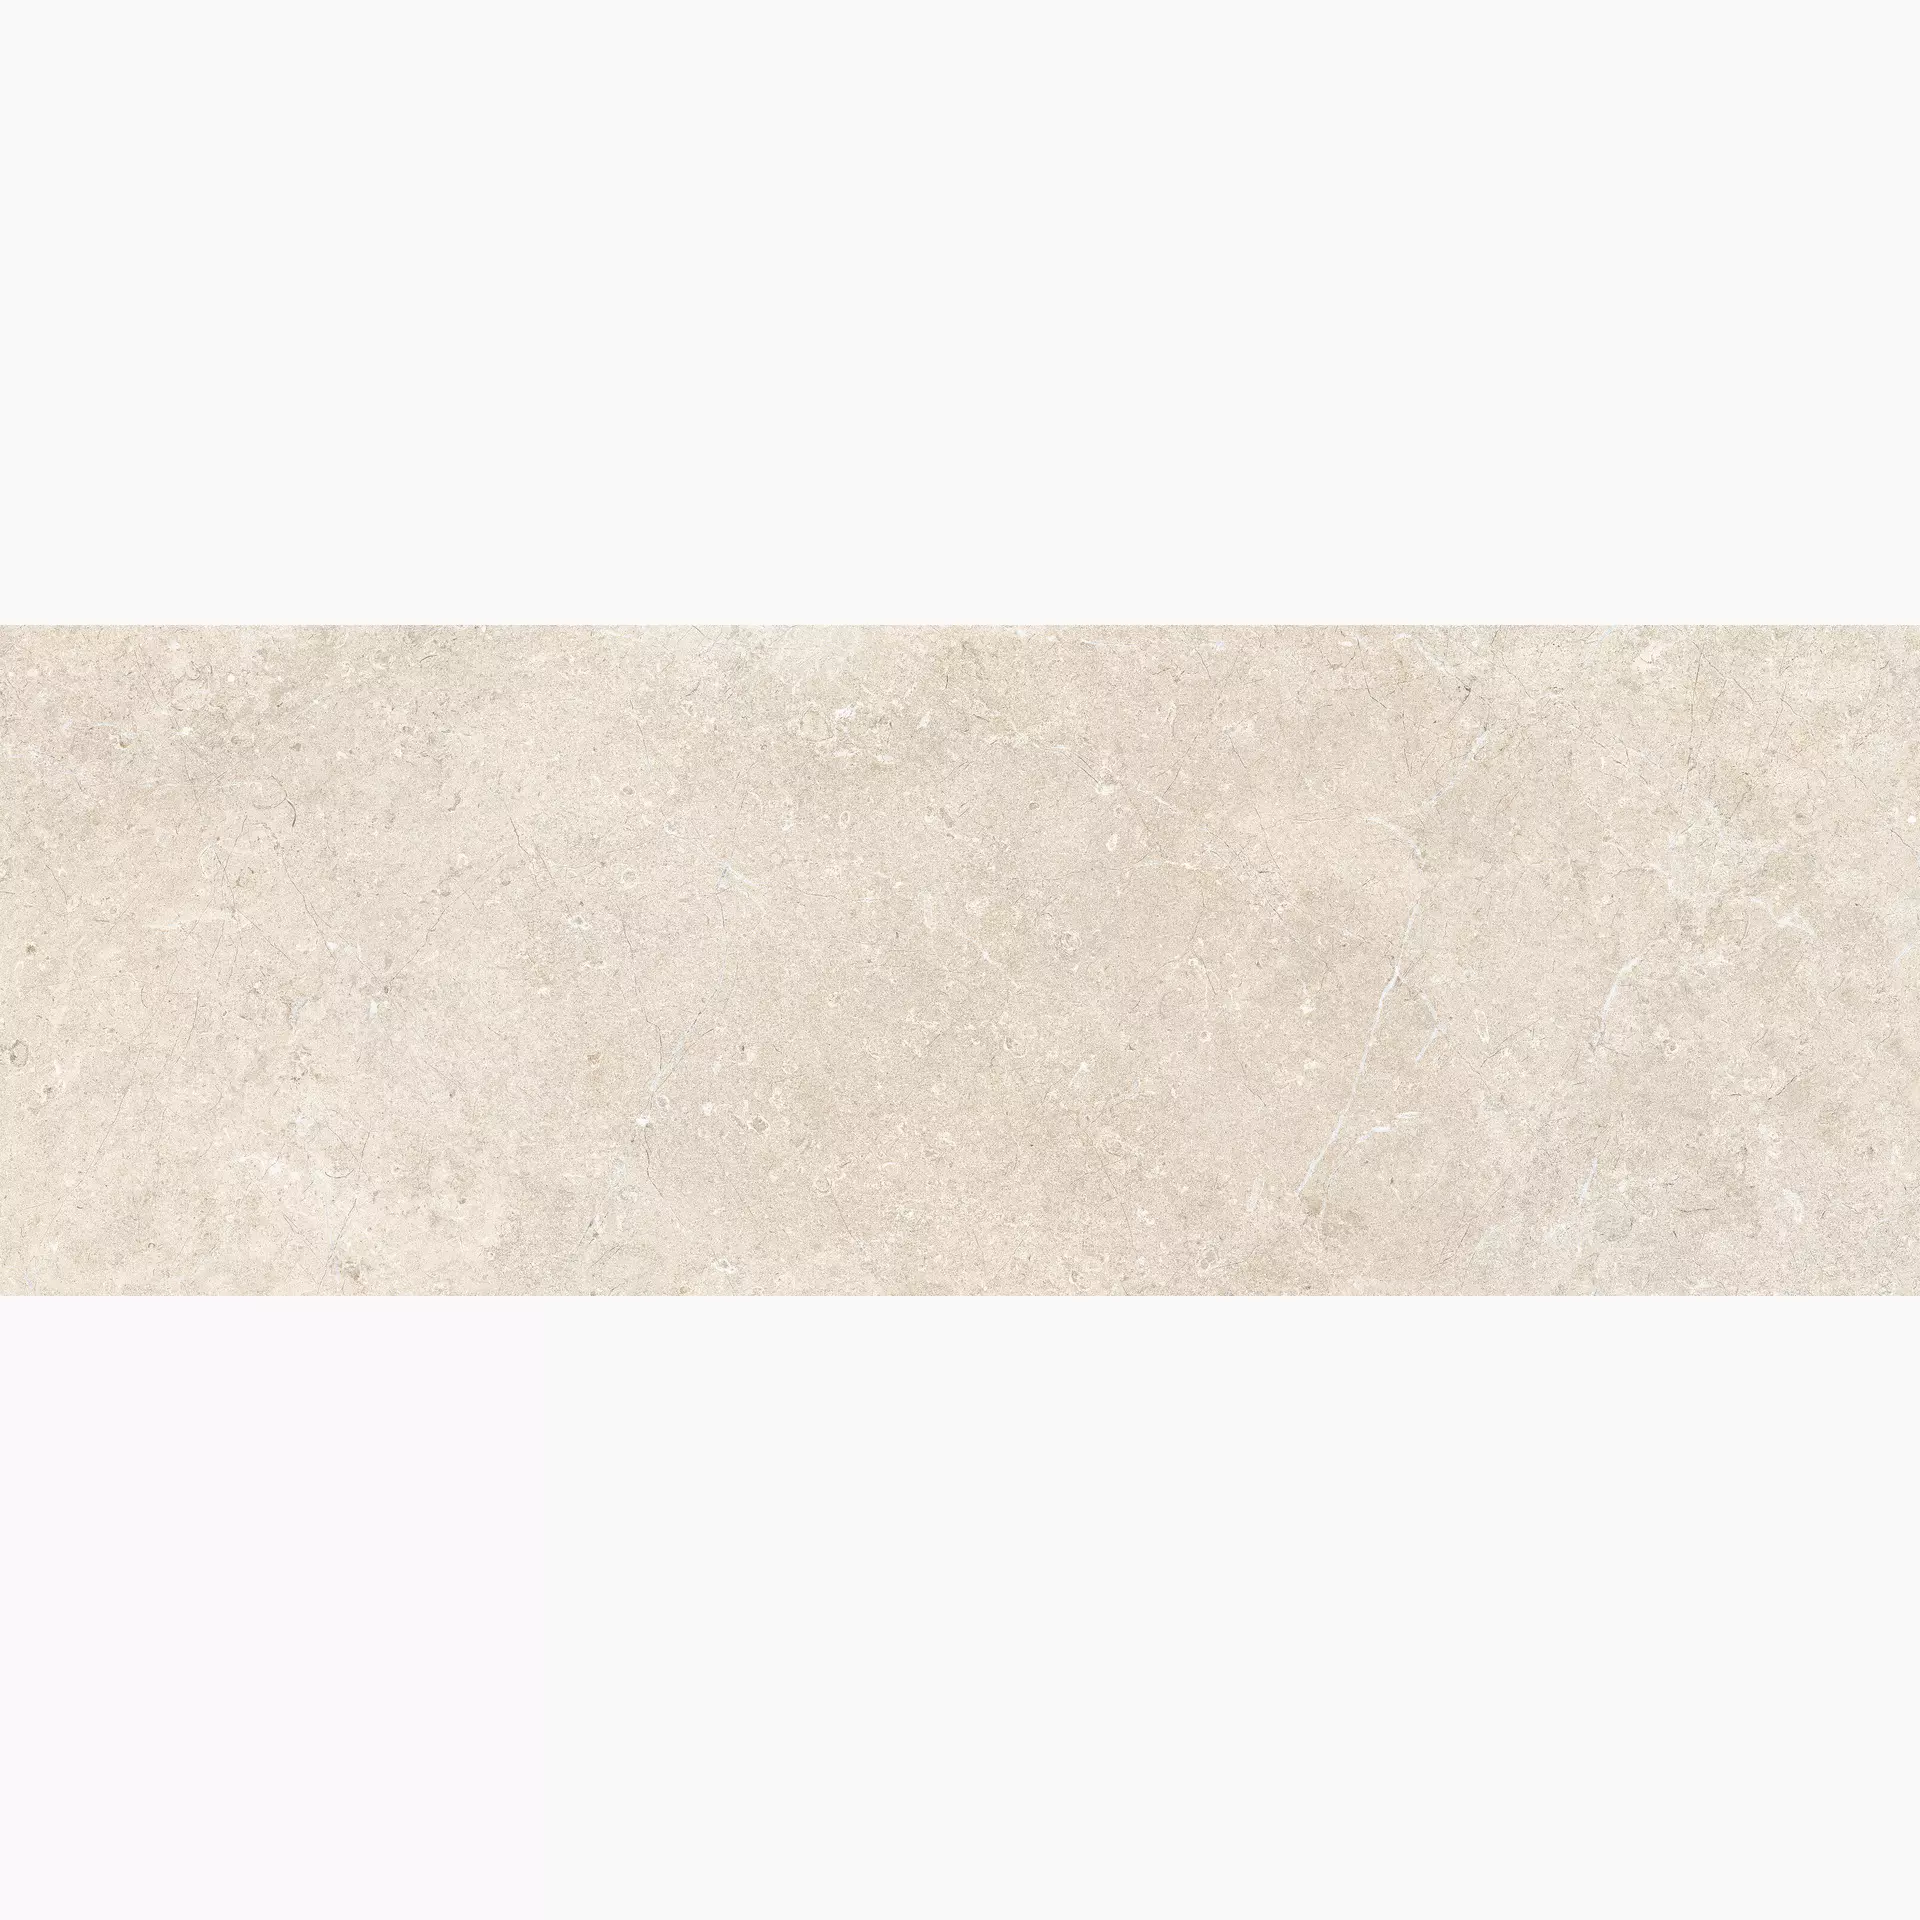 Marazzi Limestone Wall Sand Naturale – Matt MFCE 40x120cm rectified 6mm